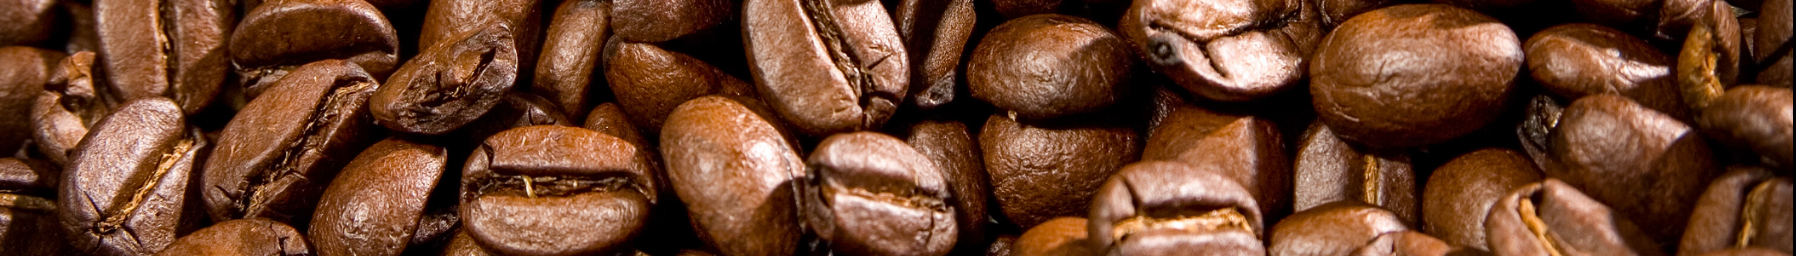 don geronimo coffeebeans